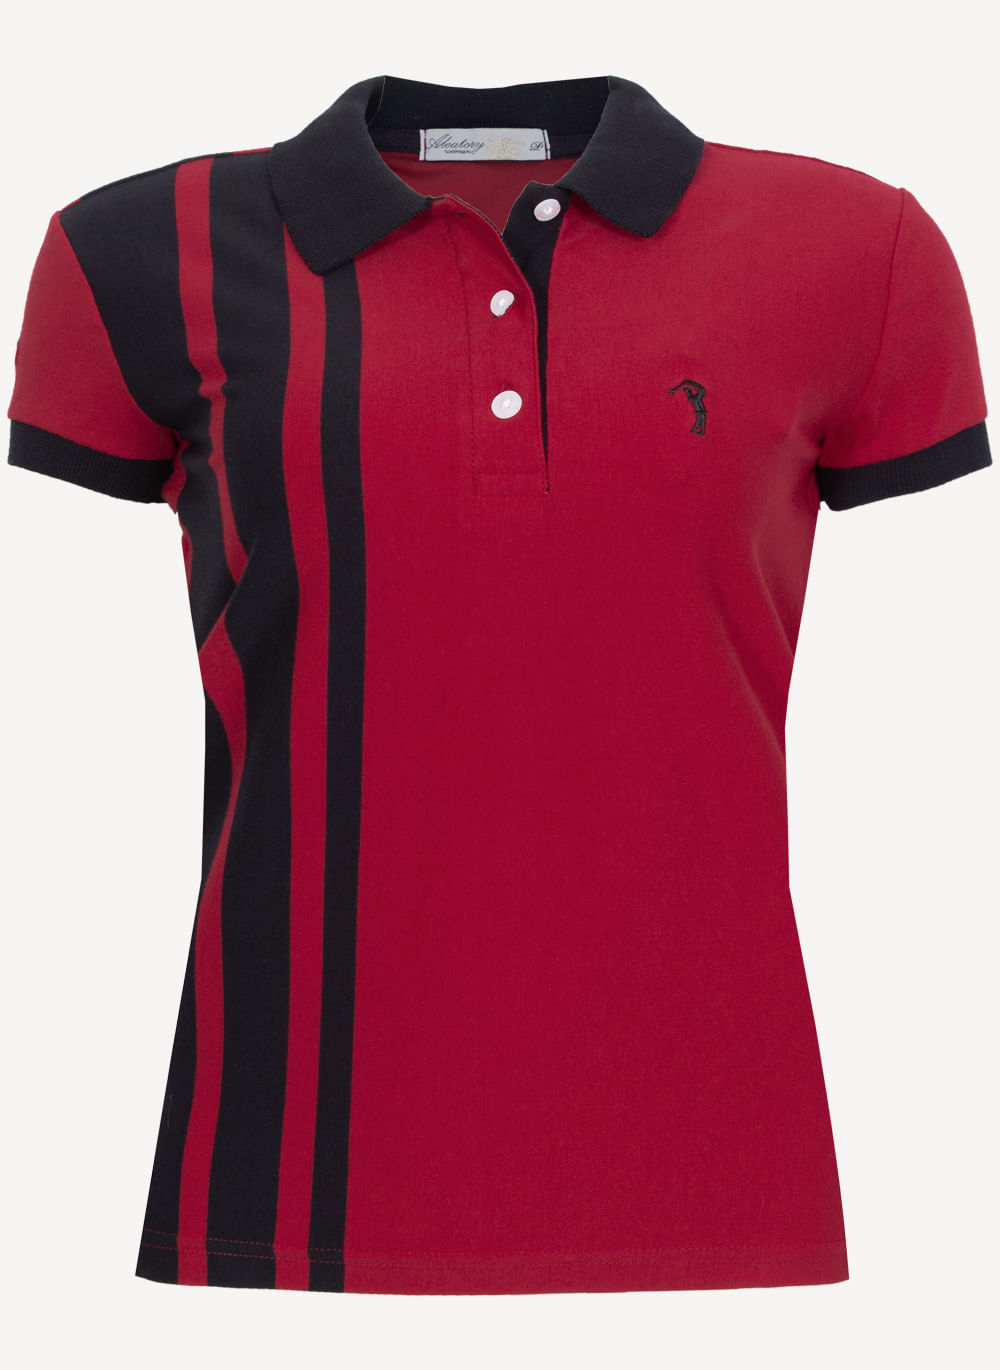 Camisa-Polo-Feminina-Aleatory-Prime-Vermelha-Vermelho-M